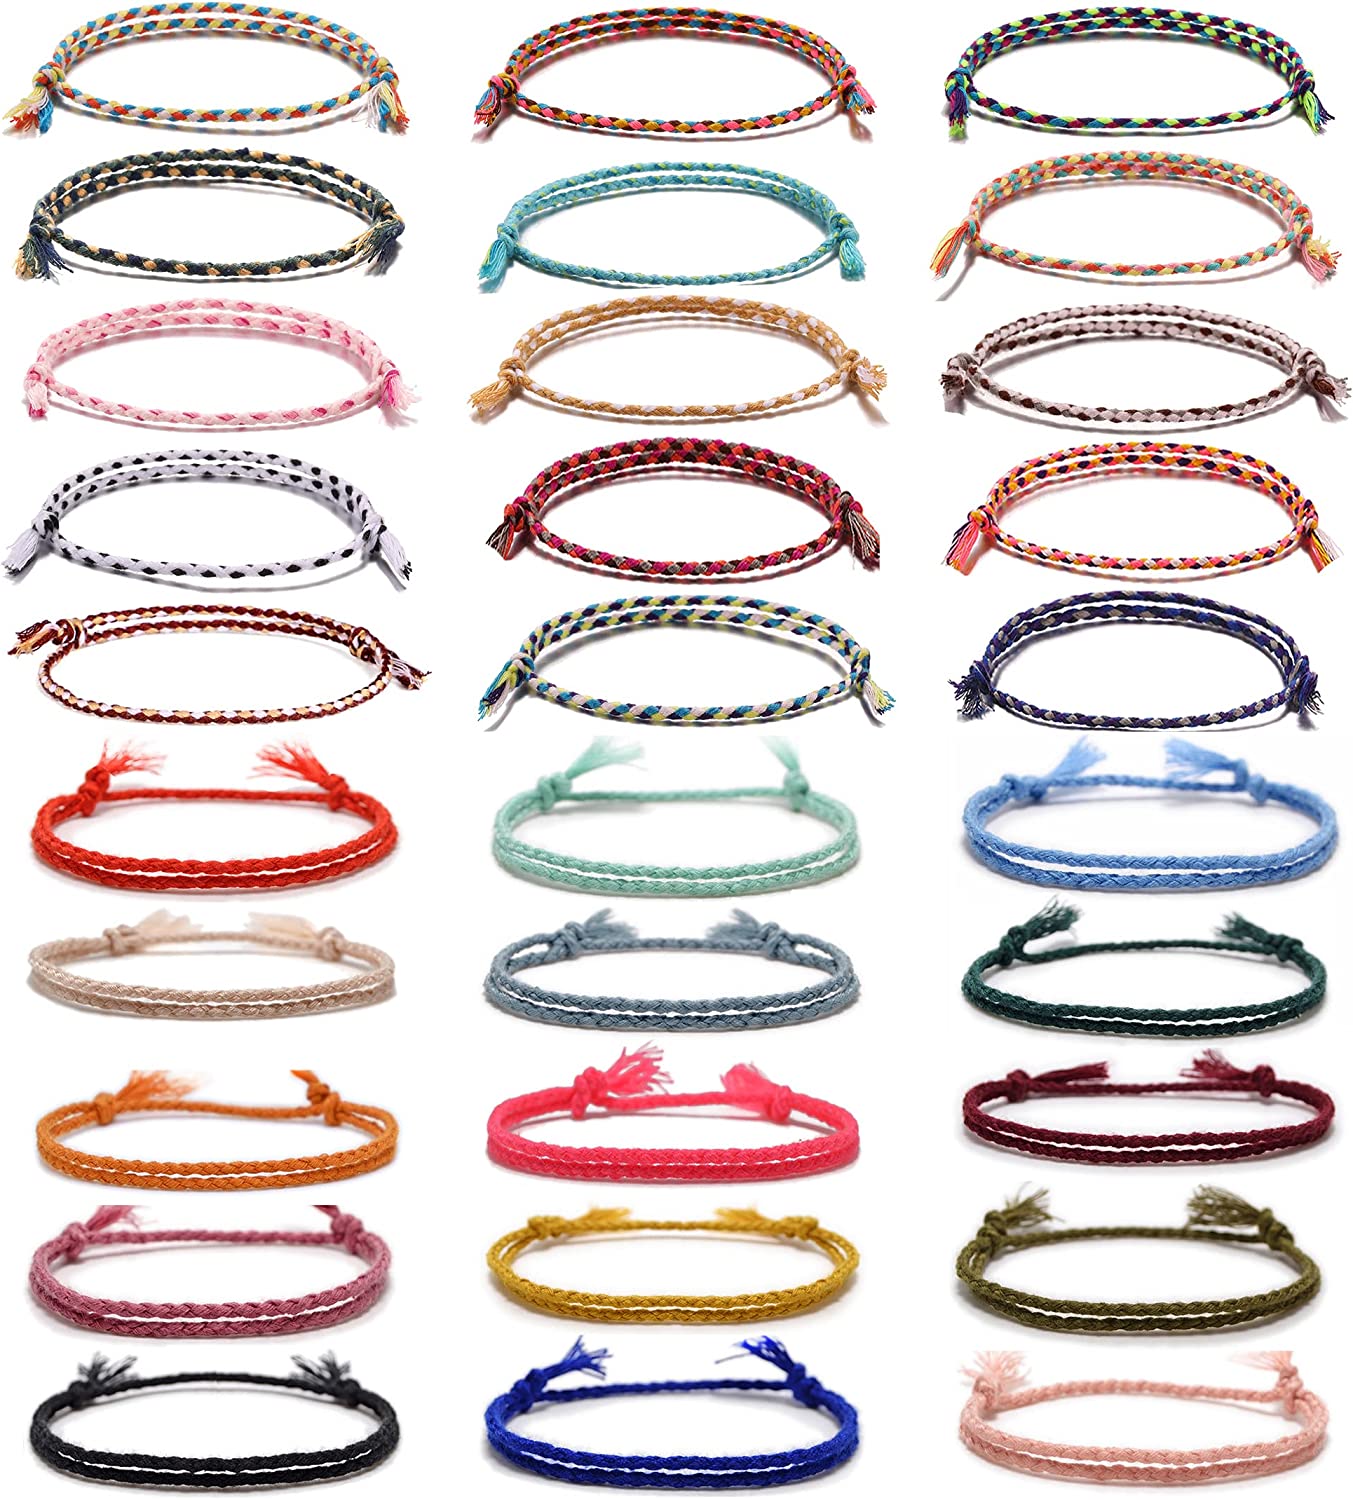 MOZAKA 30Pcs Woven Wrap Friendship Bracelets for Women Men Adjustable Colorful String Wrist Cord Handmade Friendship Braided Ankle Bracelets Party Favors